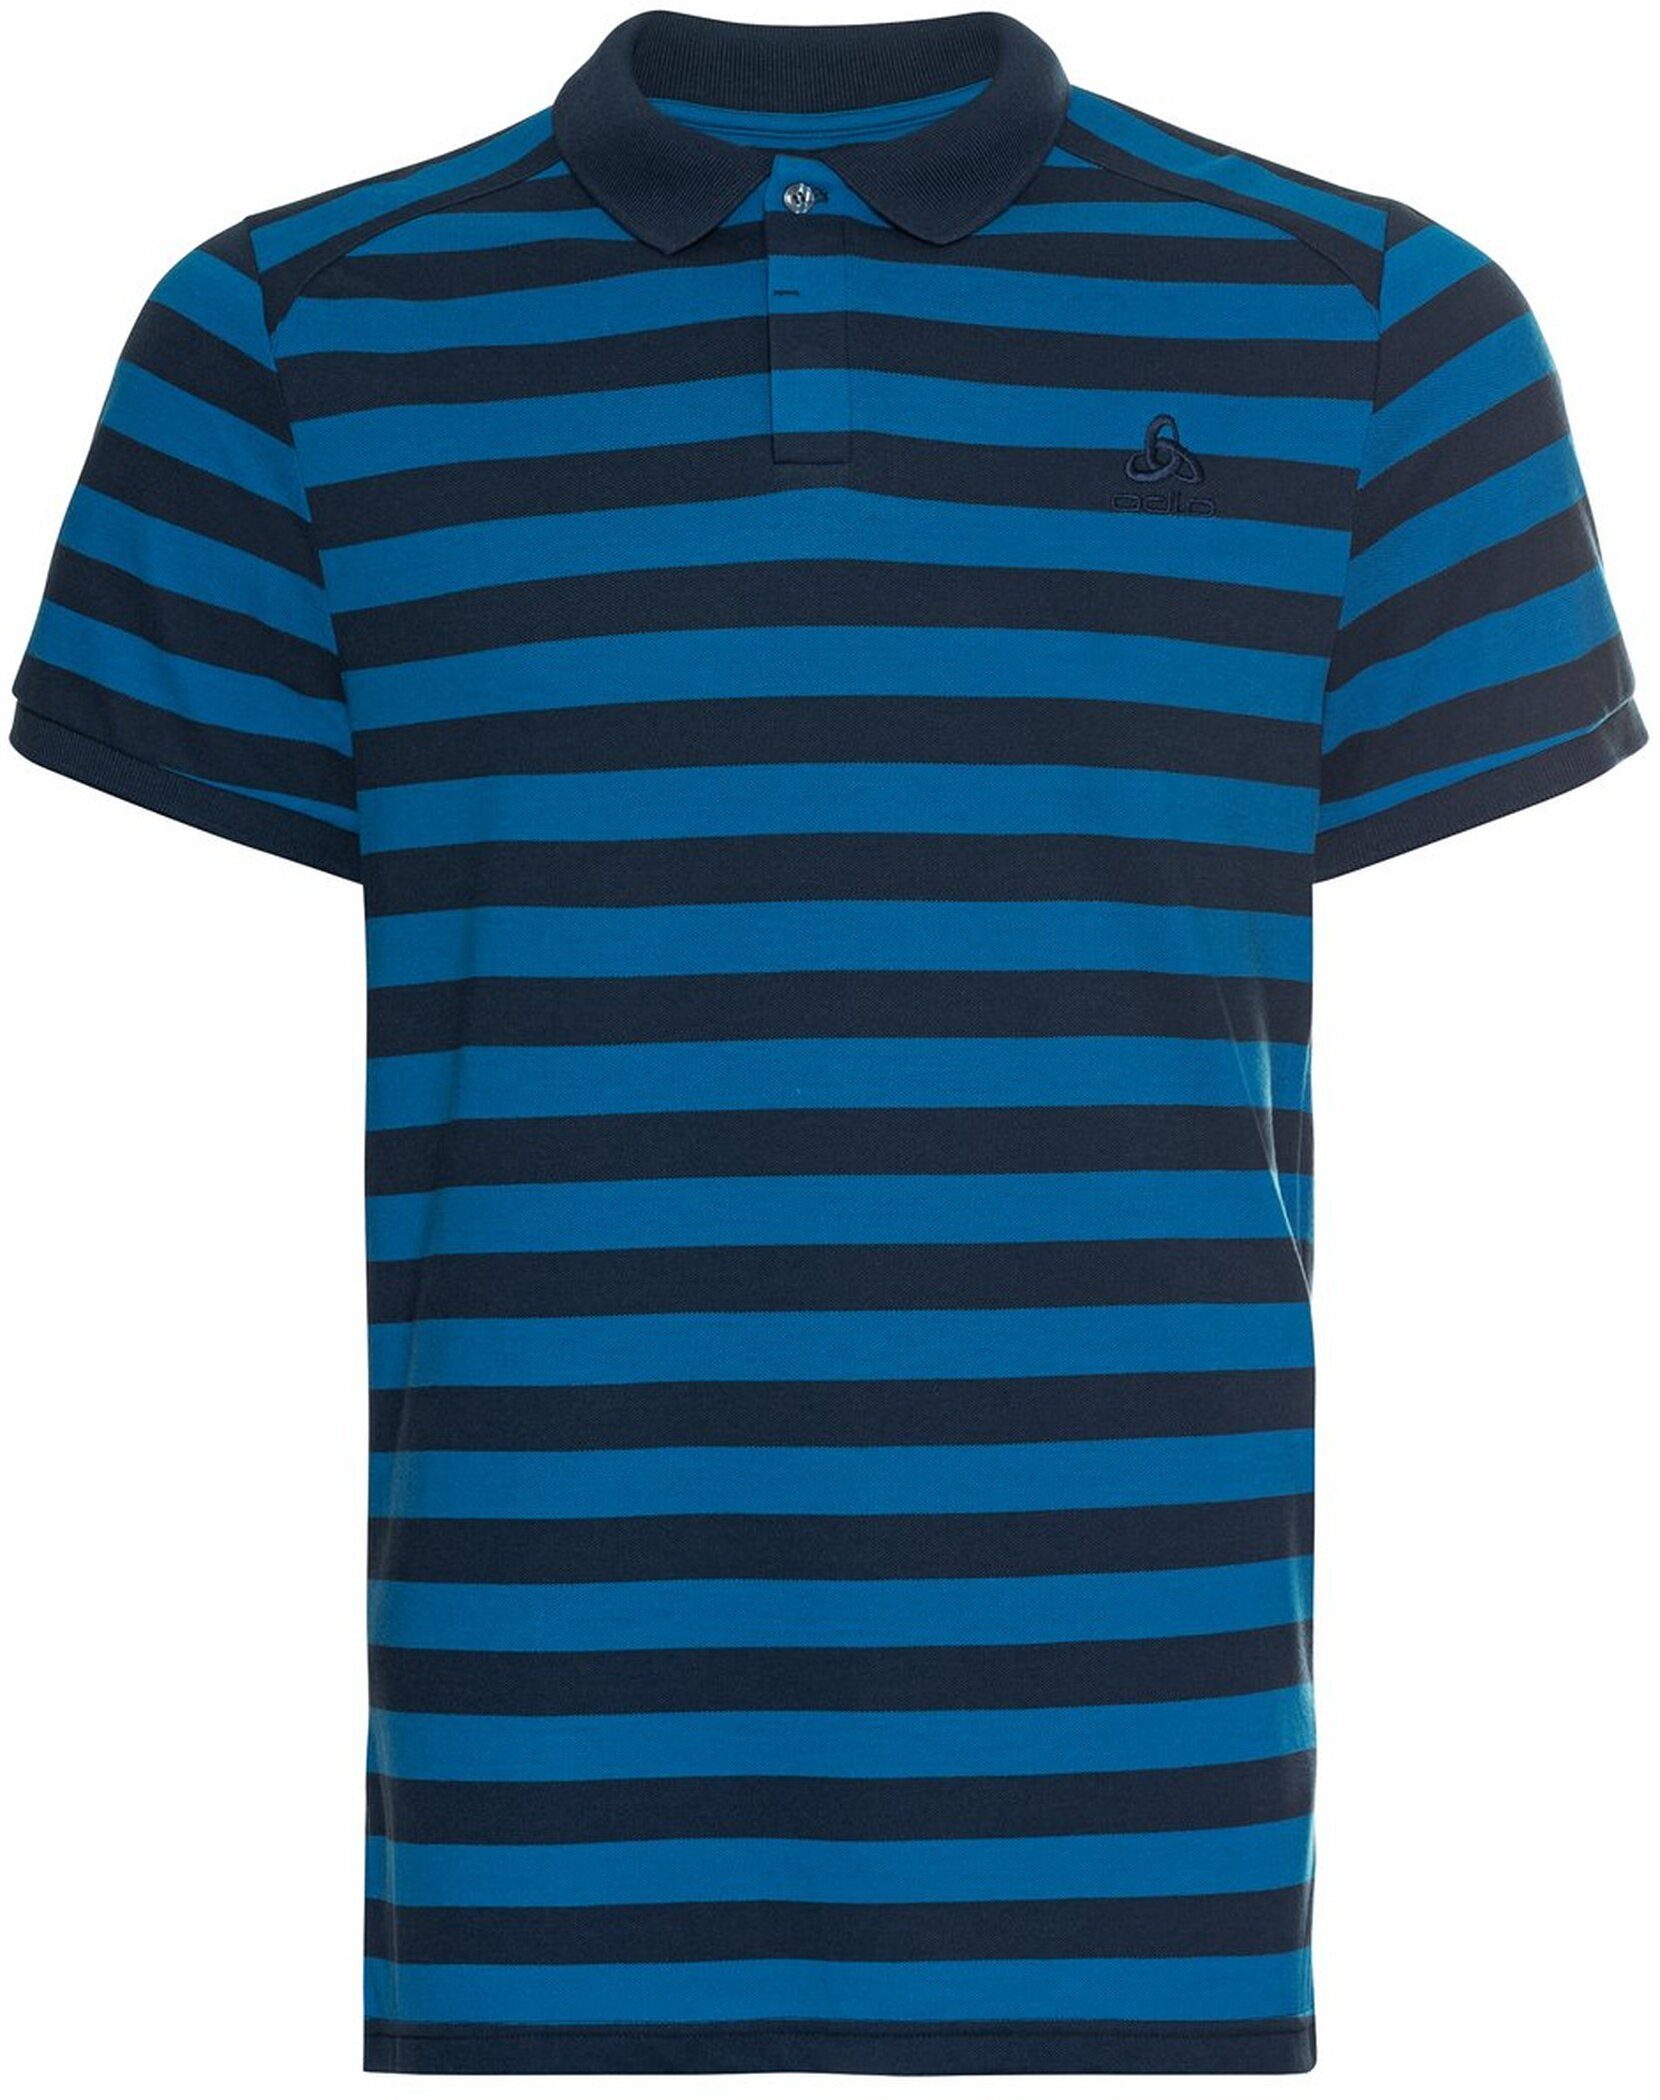 Odlo Poloshirt Polo shirt s/s blue wi CONCORD indigo 20879 - bunting